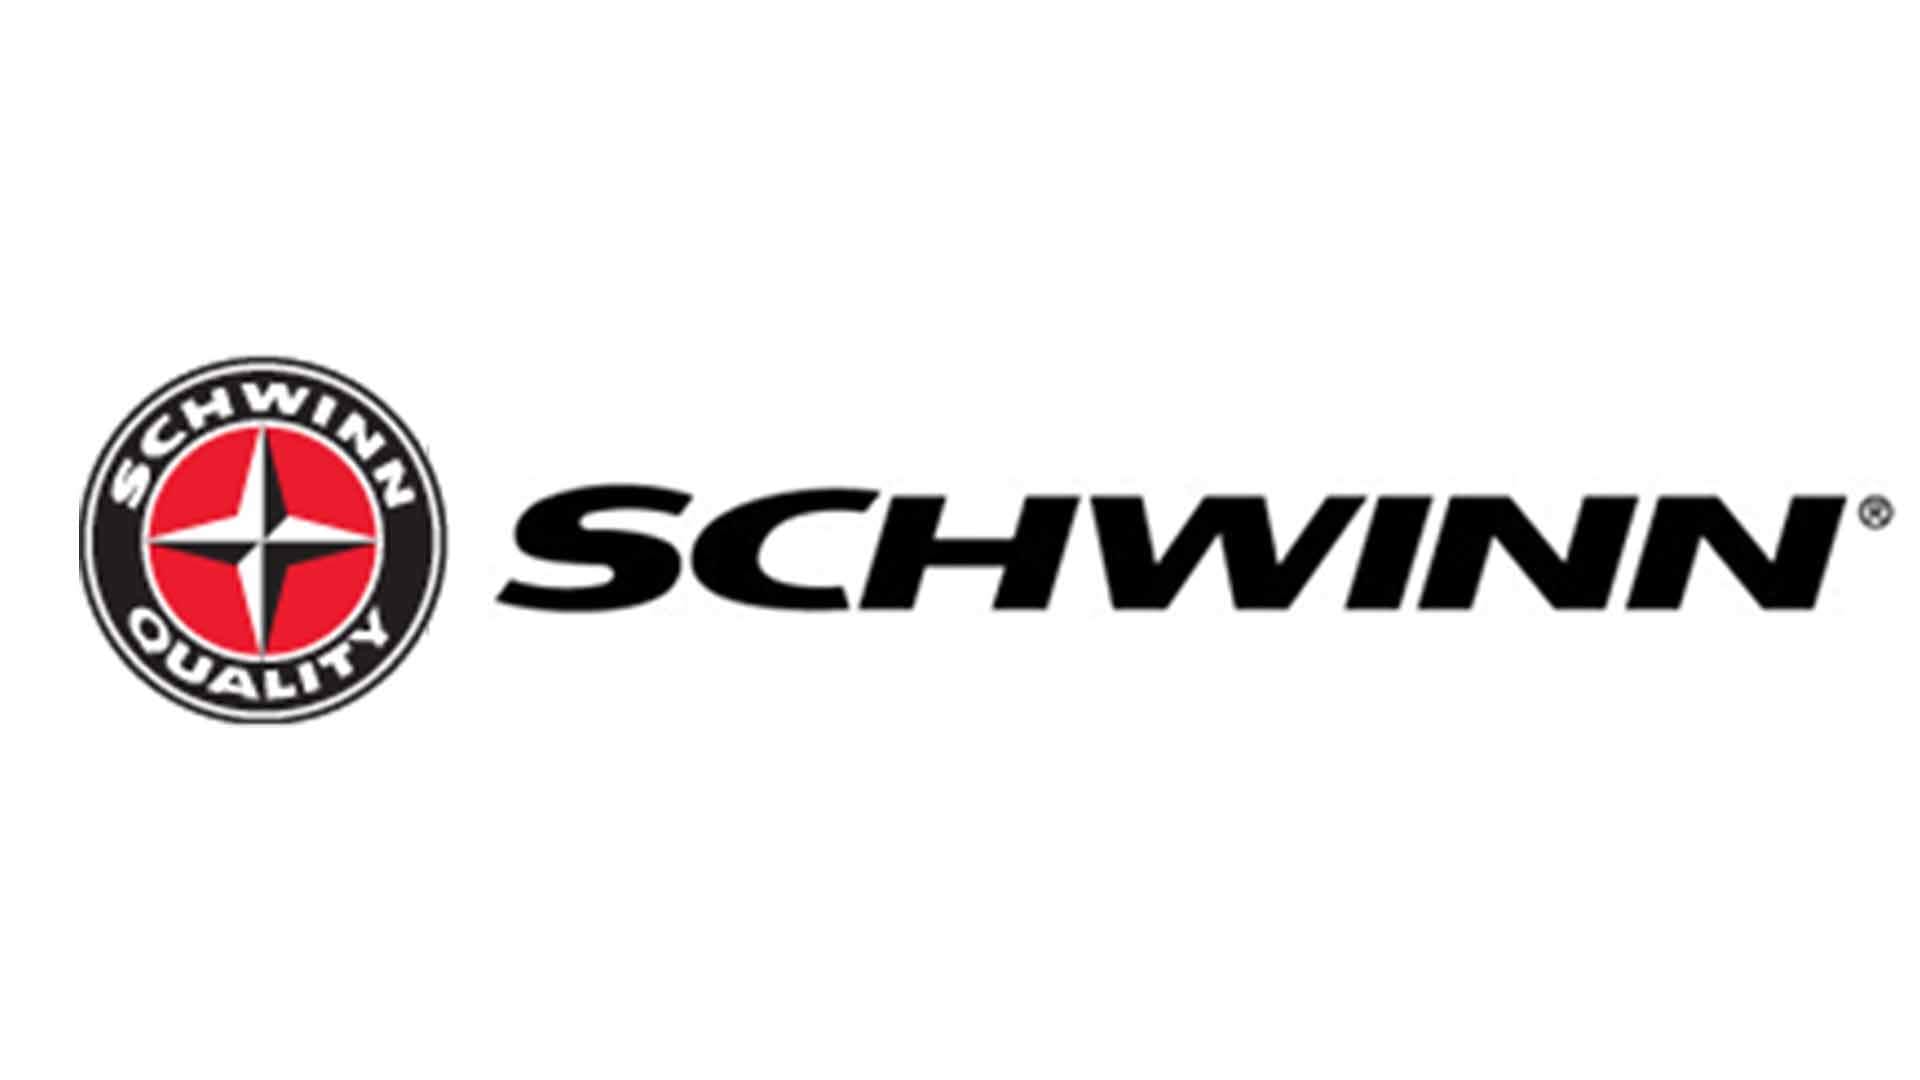 A black and white image of the schwinn logo.